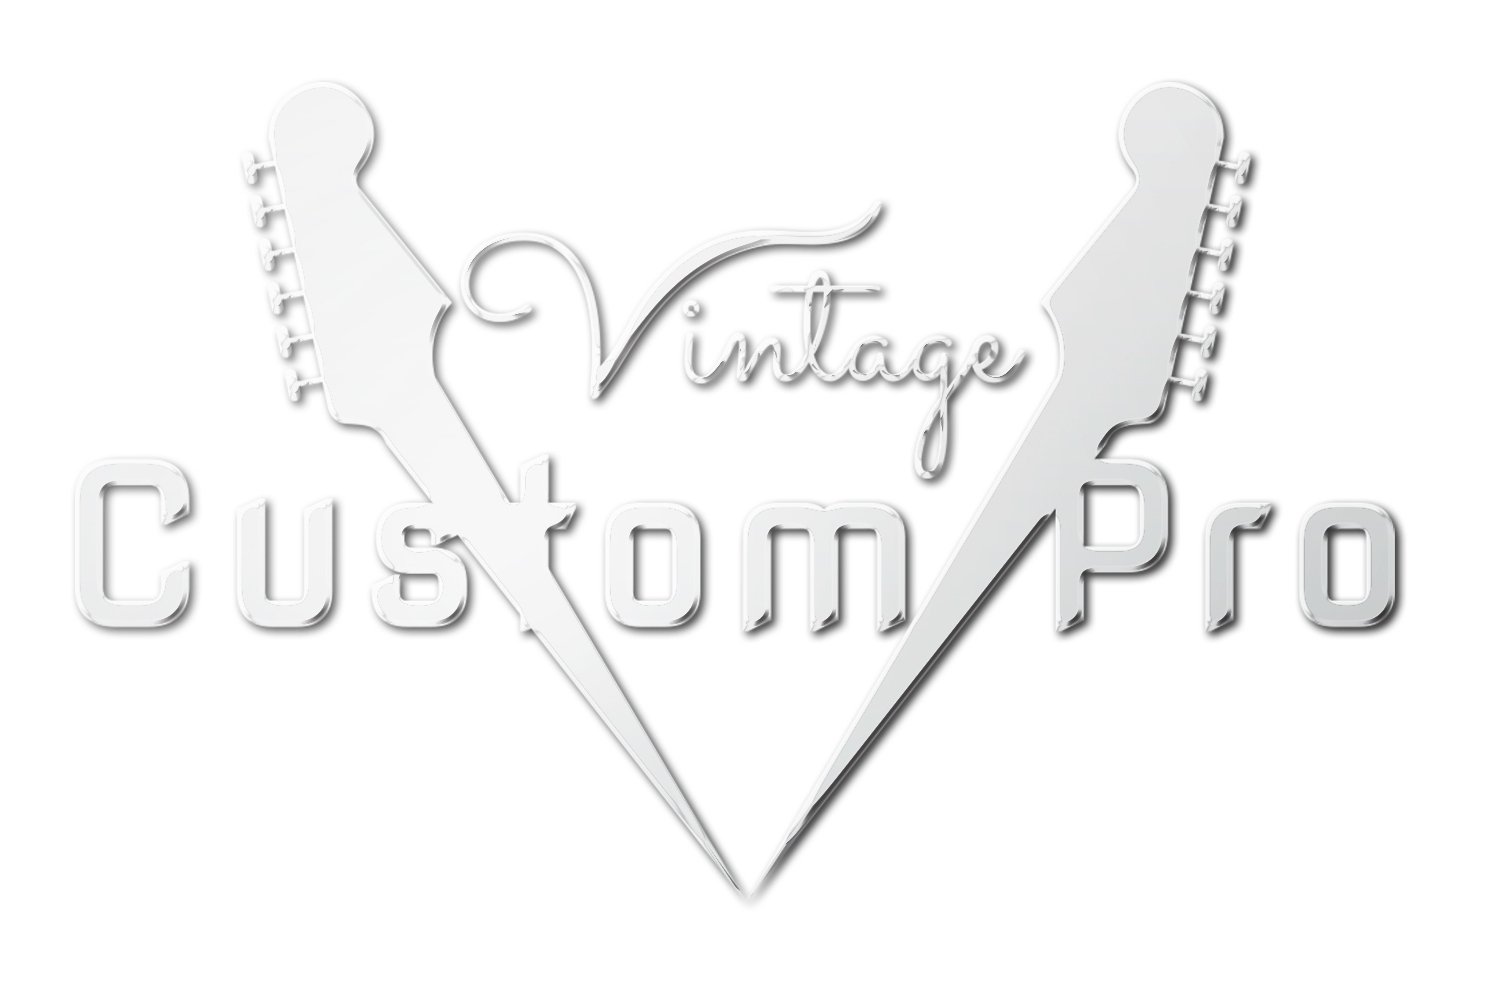 Vintage* VS6B Electric Guitar, Electric Guitar for sale at Richards Guitars.